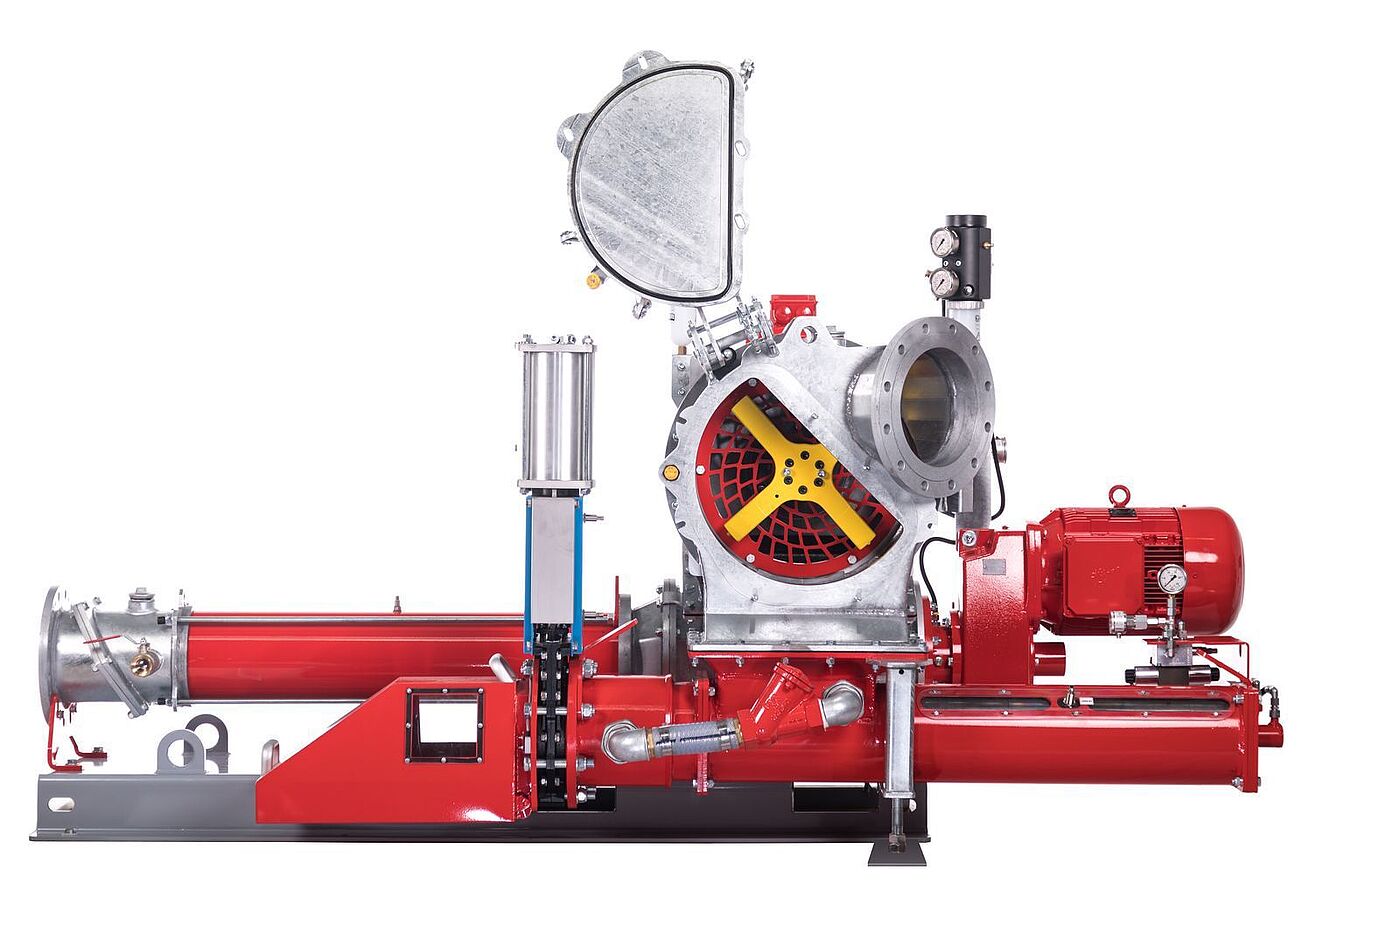 CC-Cut / RCX-58G: The powerful pump system by Vogelsang